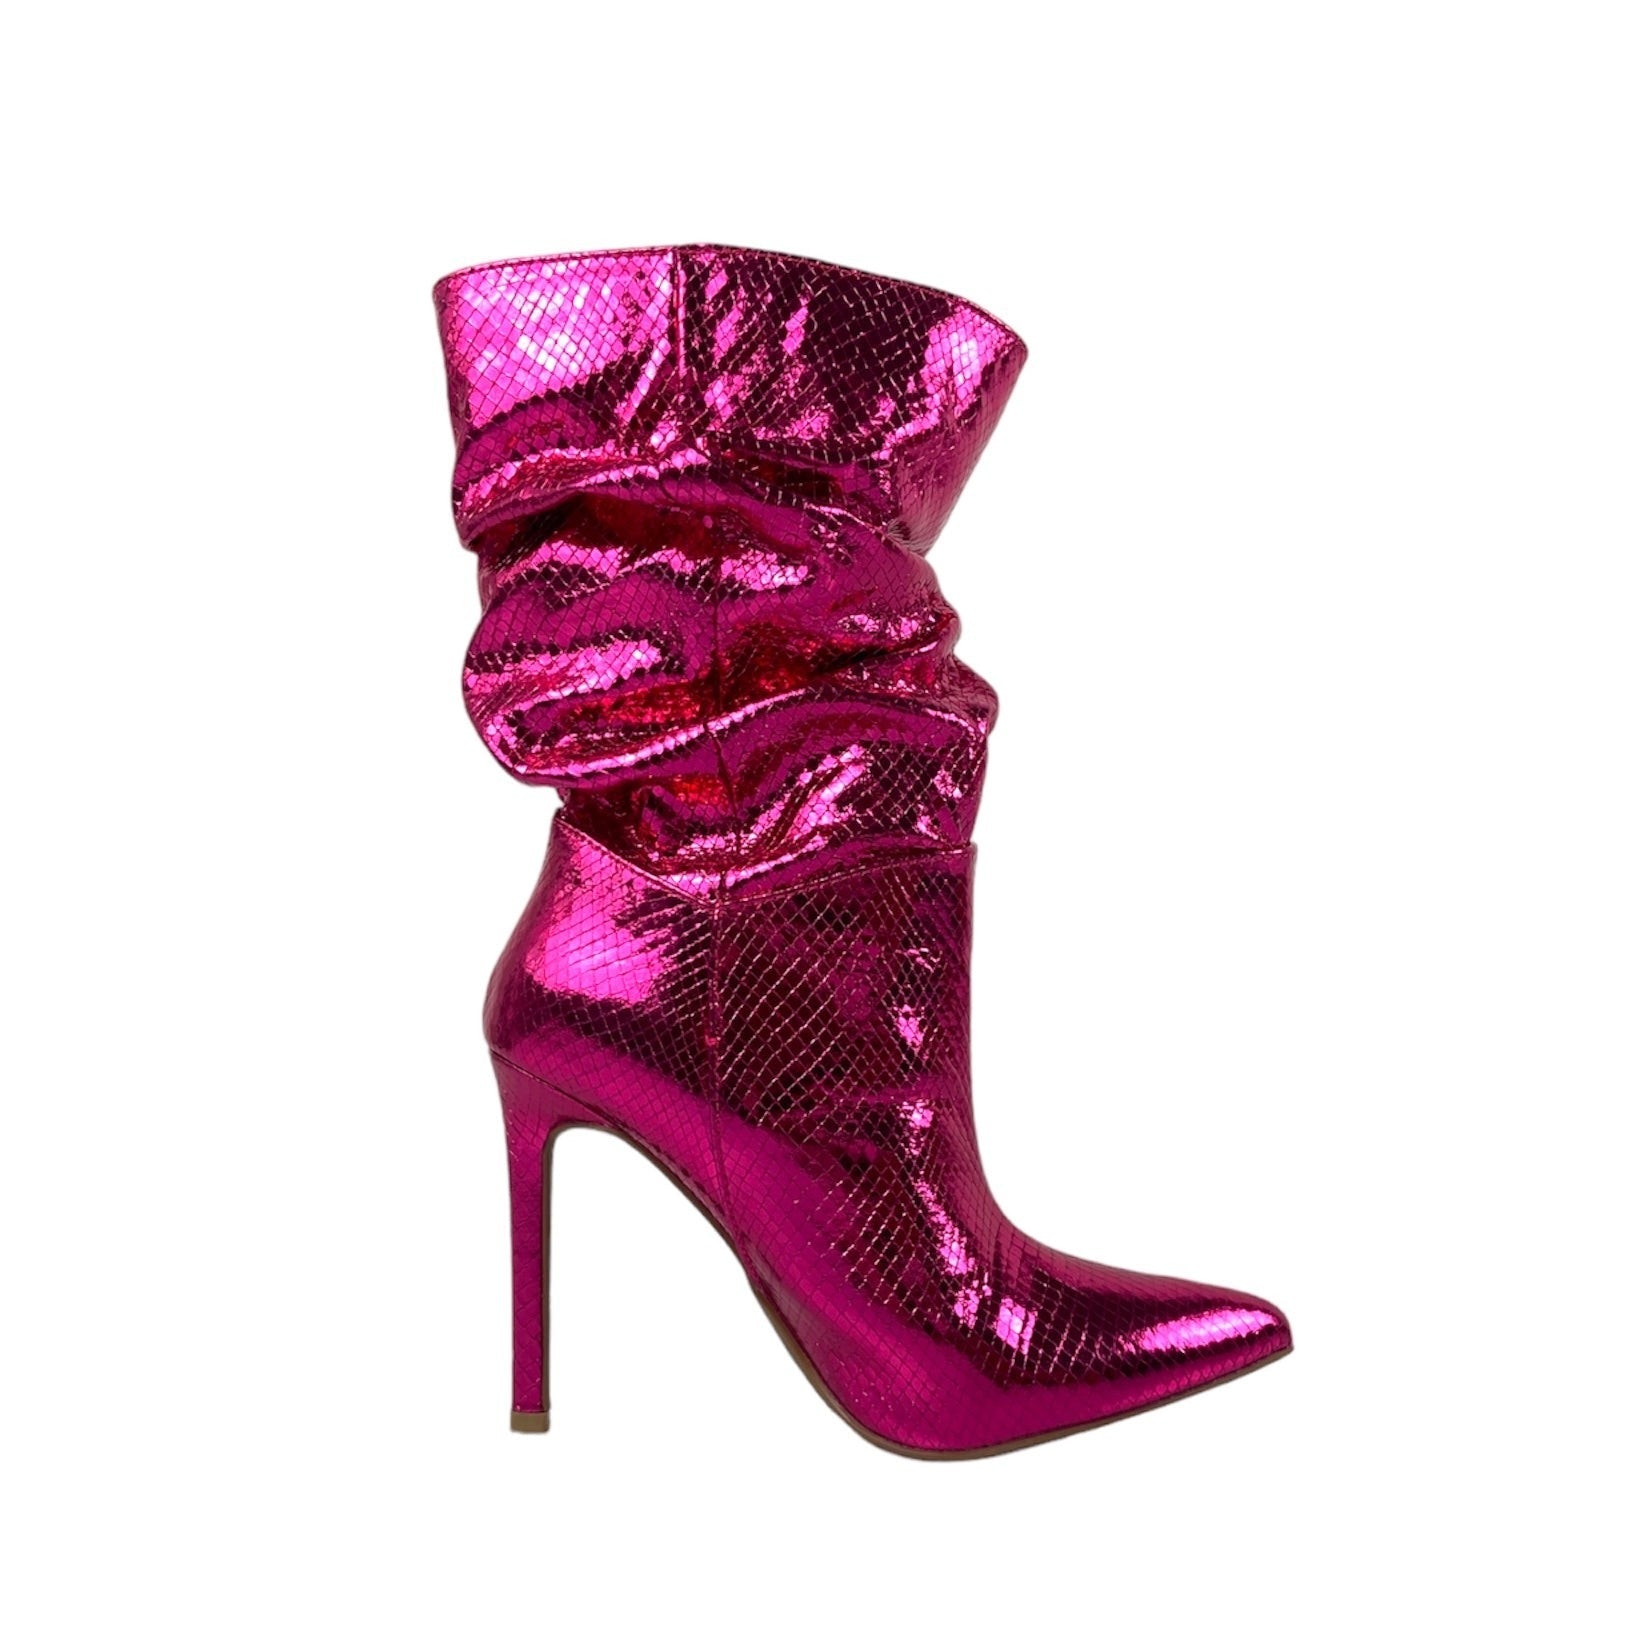 Women's Metallic Snake Skin Boots - BaeBekillinem Boutique- Microfiber/Rubber/ PU leather- Silver/ Fuchsia